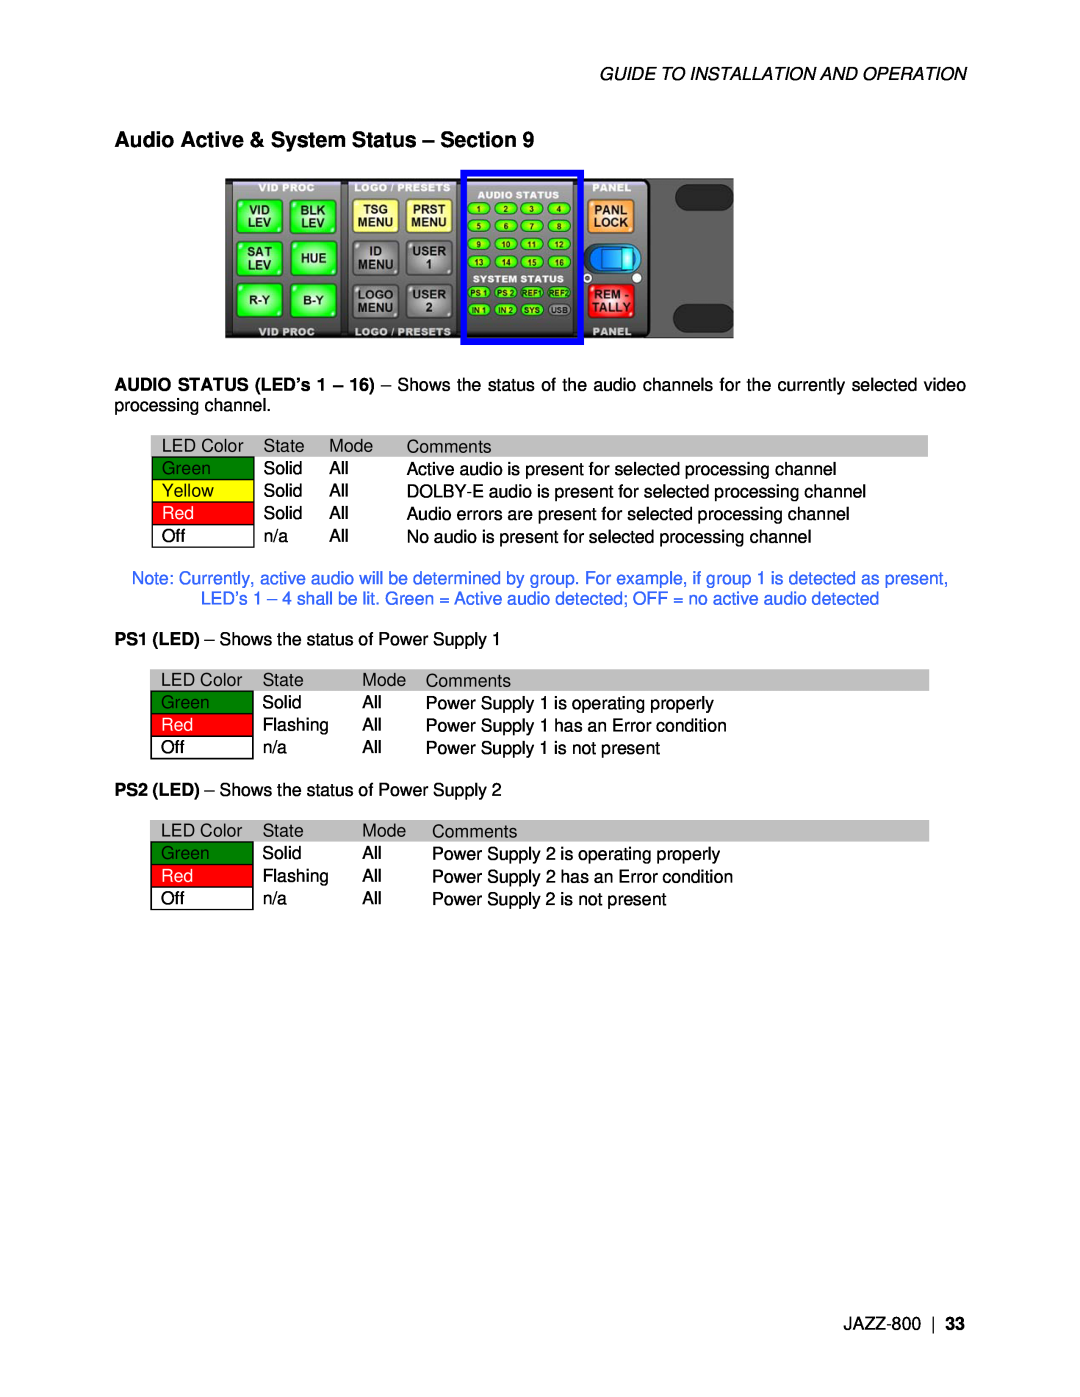 Miranda Camera Co JAZZ-800 manual Audio Active & System Status - Section 